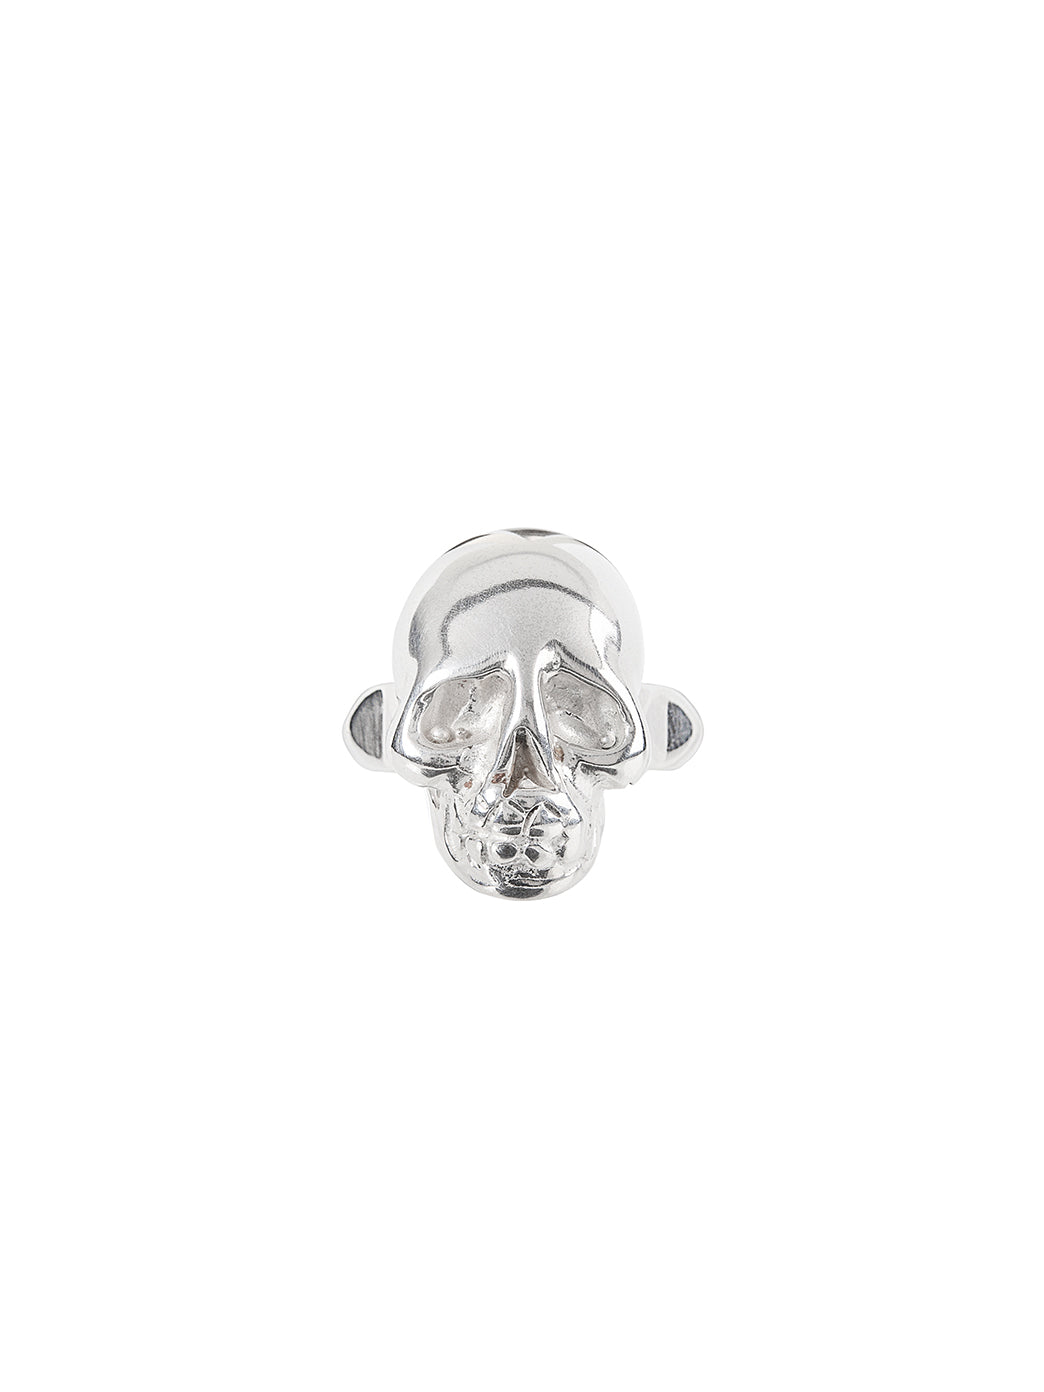 Fiorina Jewellery Gladiator Skull Ring